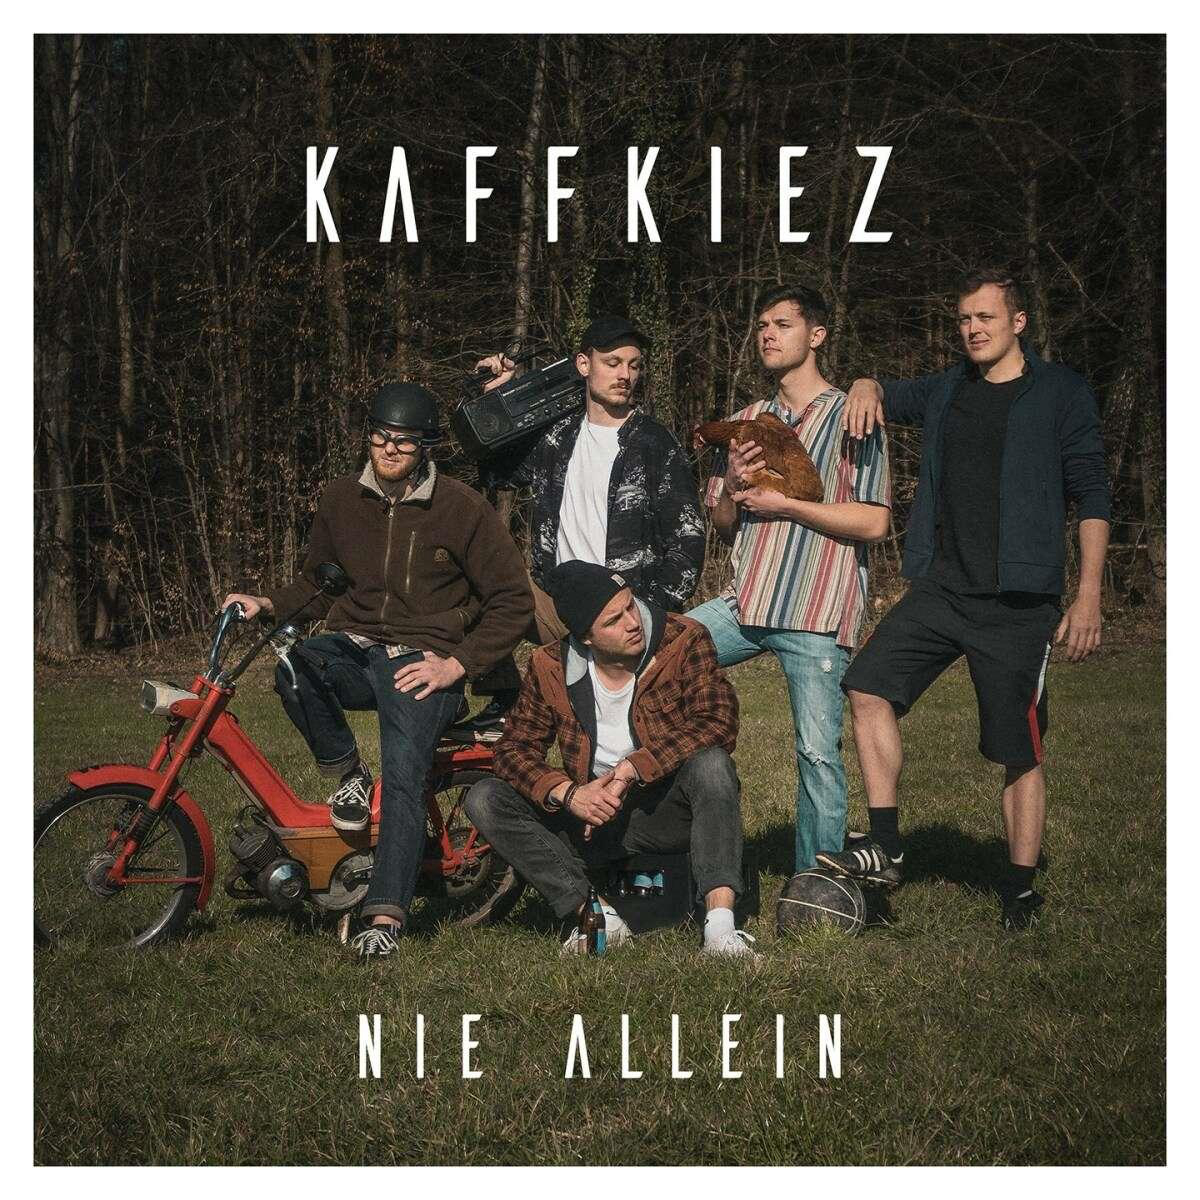 Kaffkiez - Nie Allein (Black Vinyl) (Vinyl) 